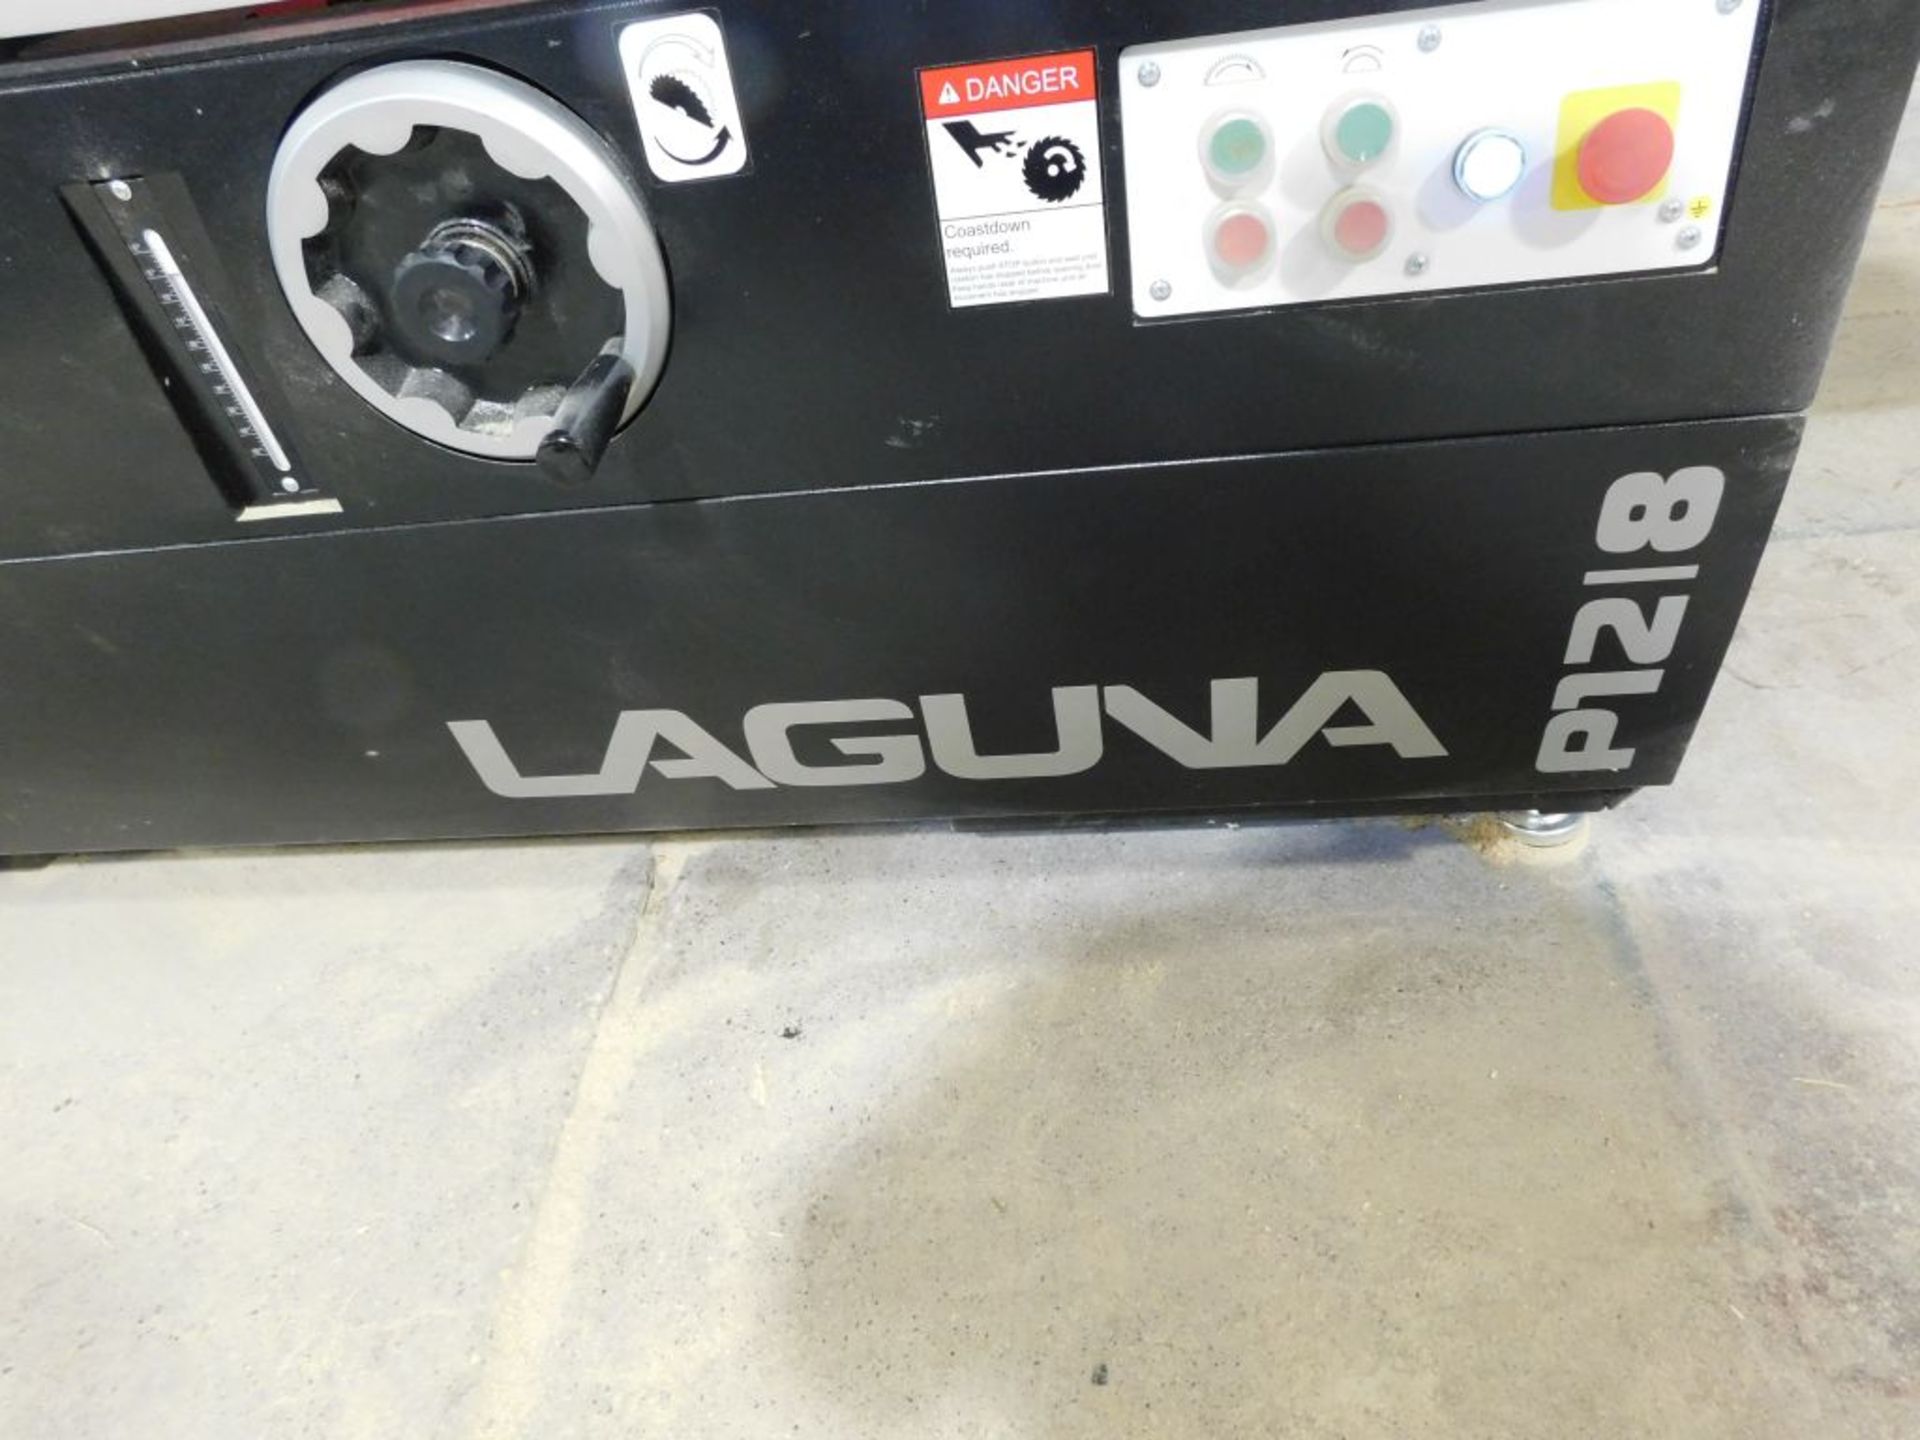 2020 Laguna horz. Panel saw, model MP5P12-8-0135, sn 200922605PZM, 5 3/4 hp, - Image 5 of 6